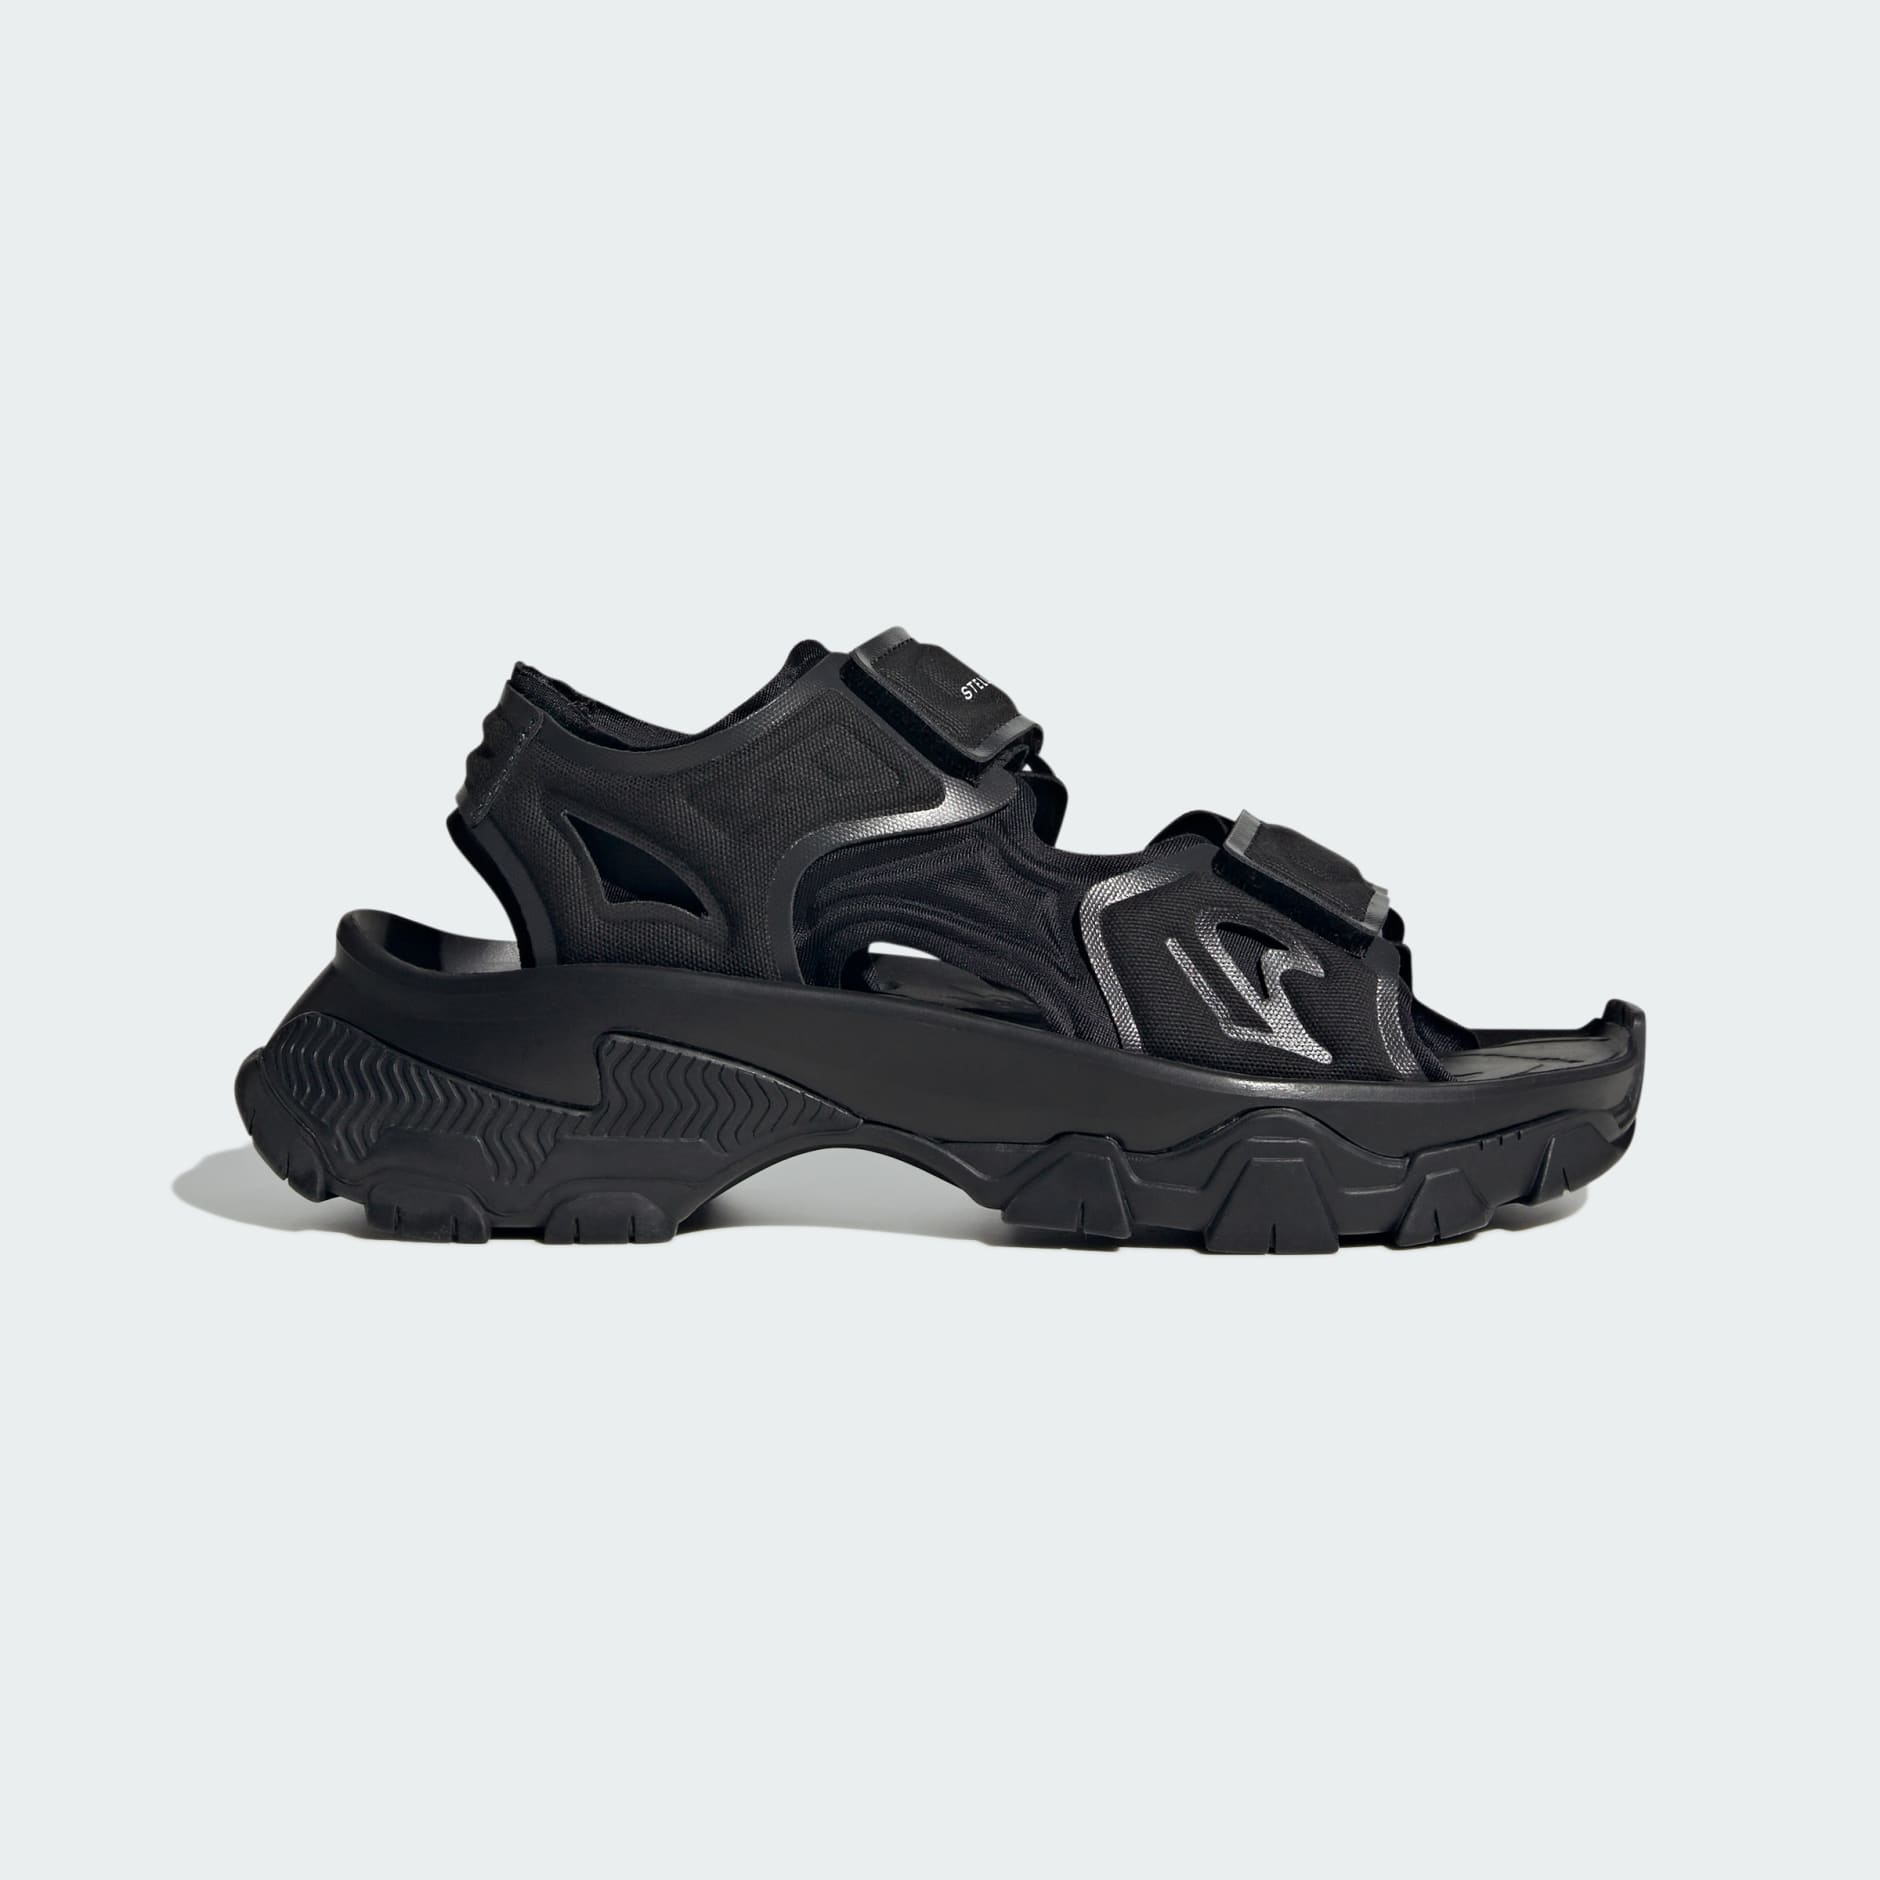 Buy Adidas Sandals Women Original Sale online | Lazada.com.ph